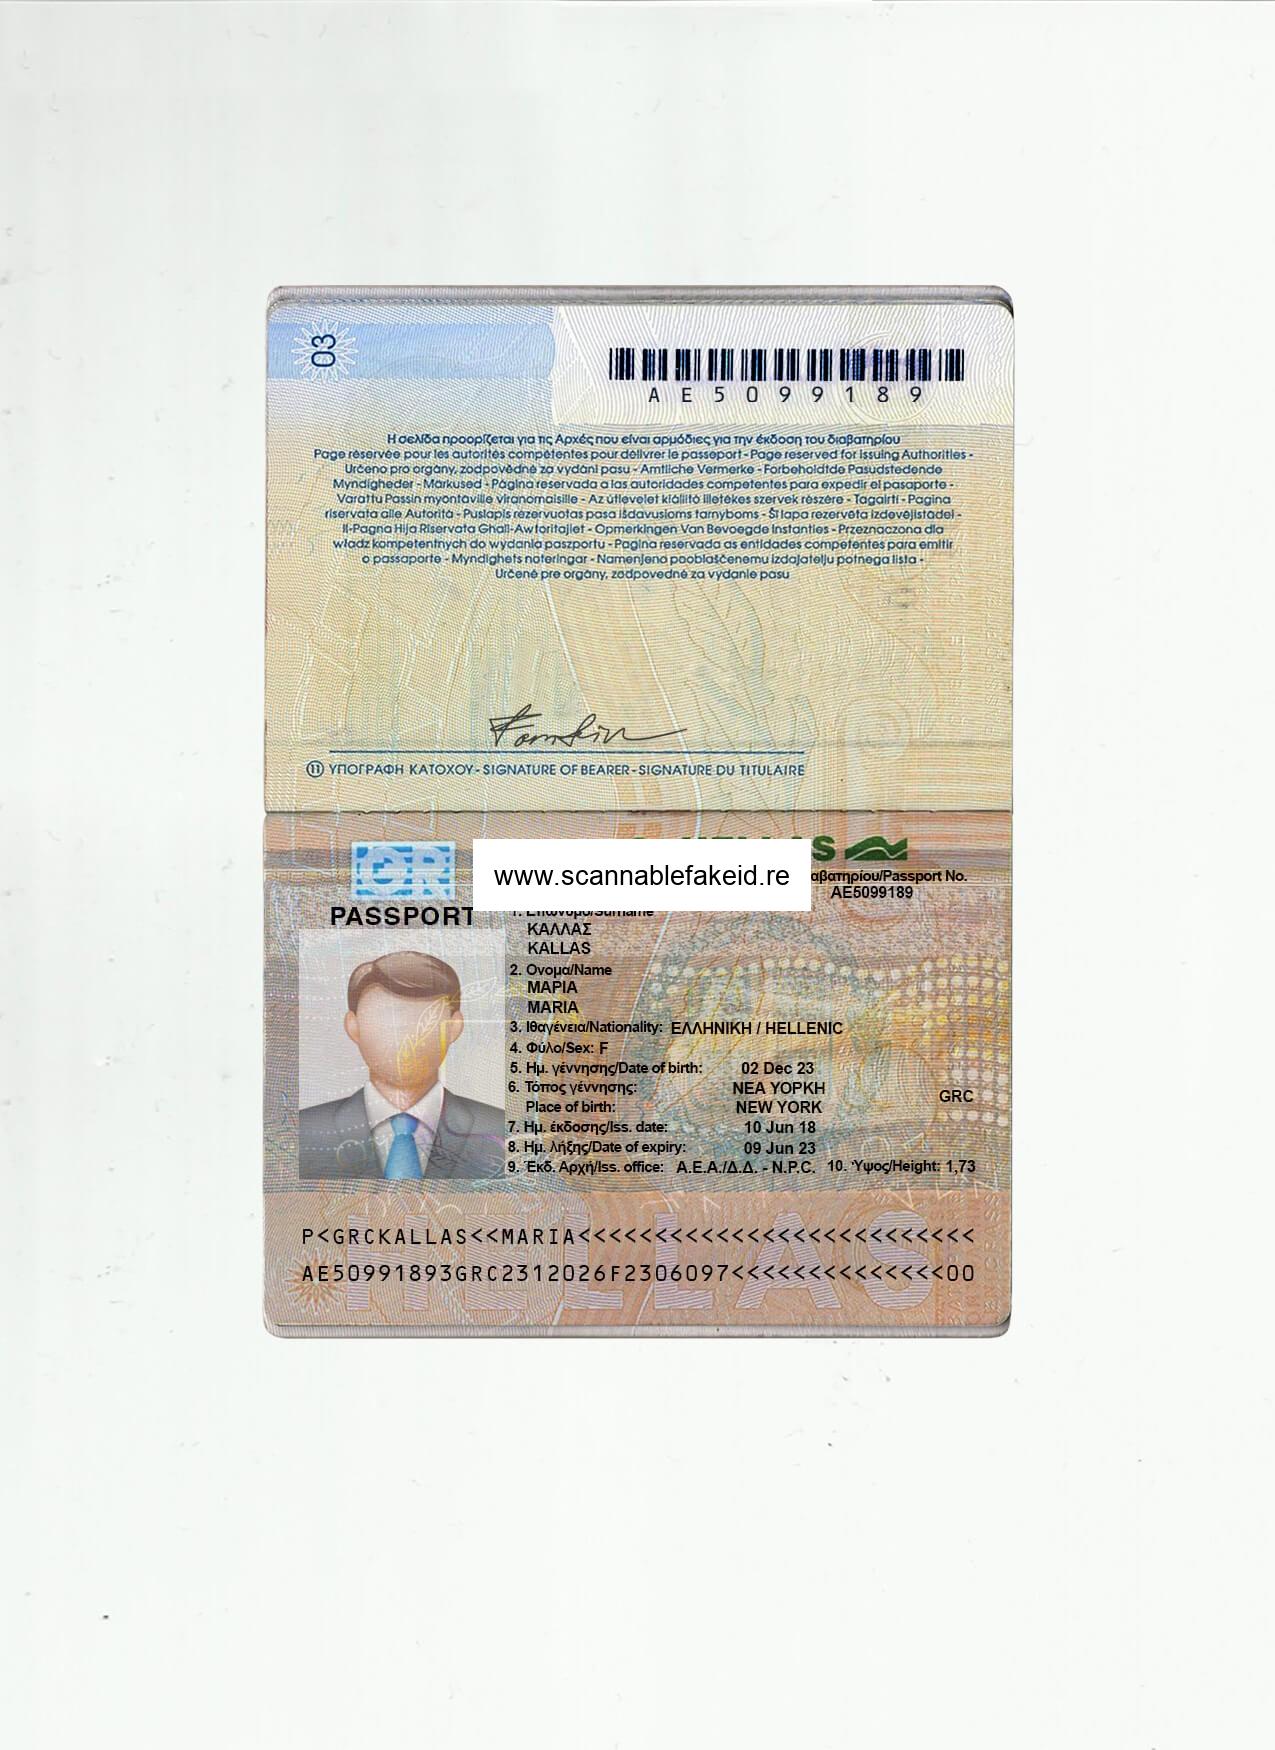 Greece Fake Passport - Buy Scannable Fake ID Online - Fake Drivers License